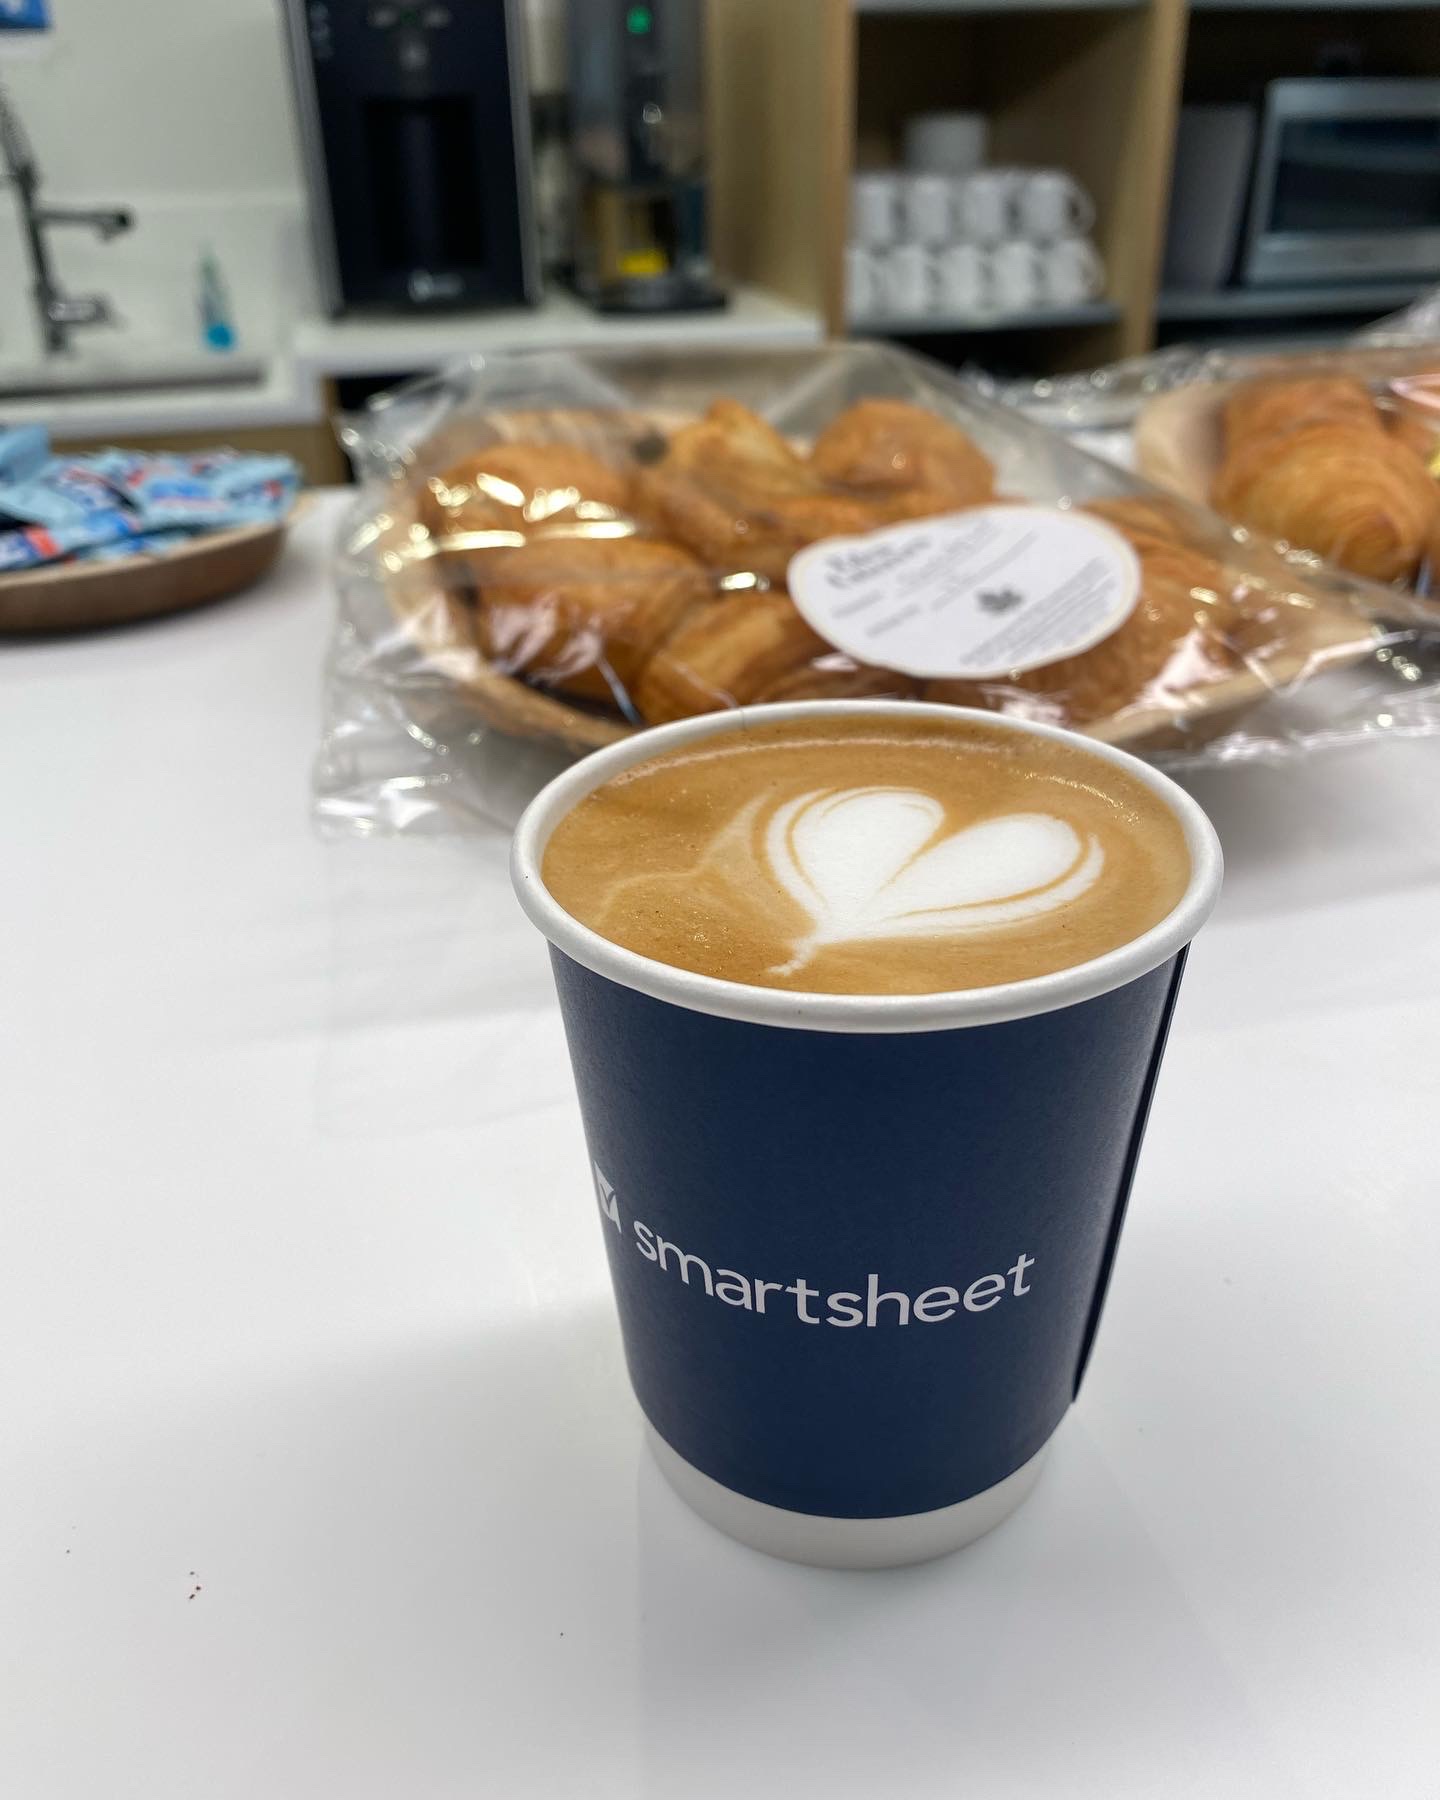 The Mobile Coffee Bean Smartsheet impressive heart latte art